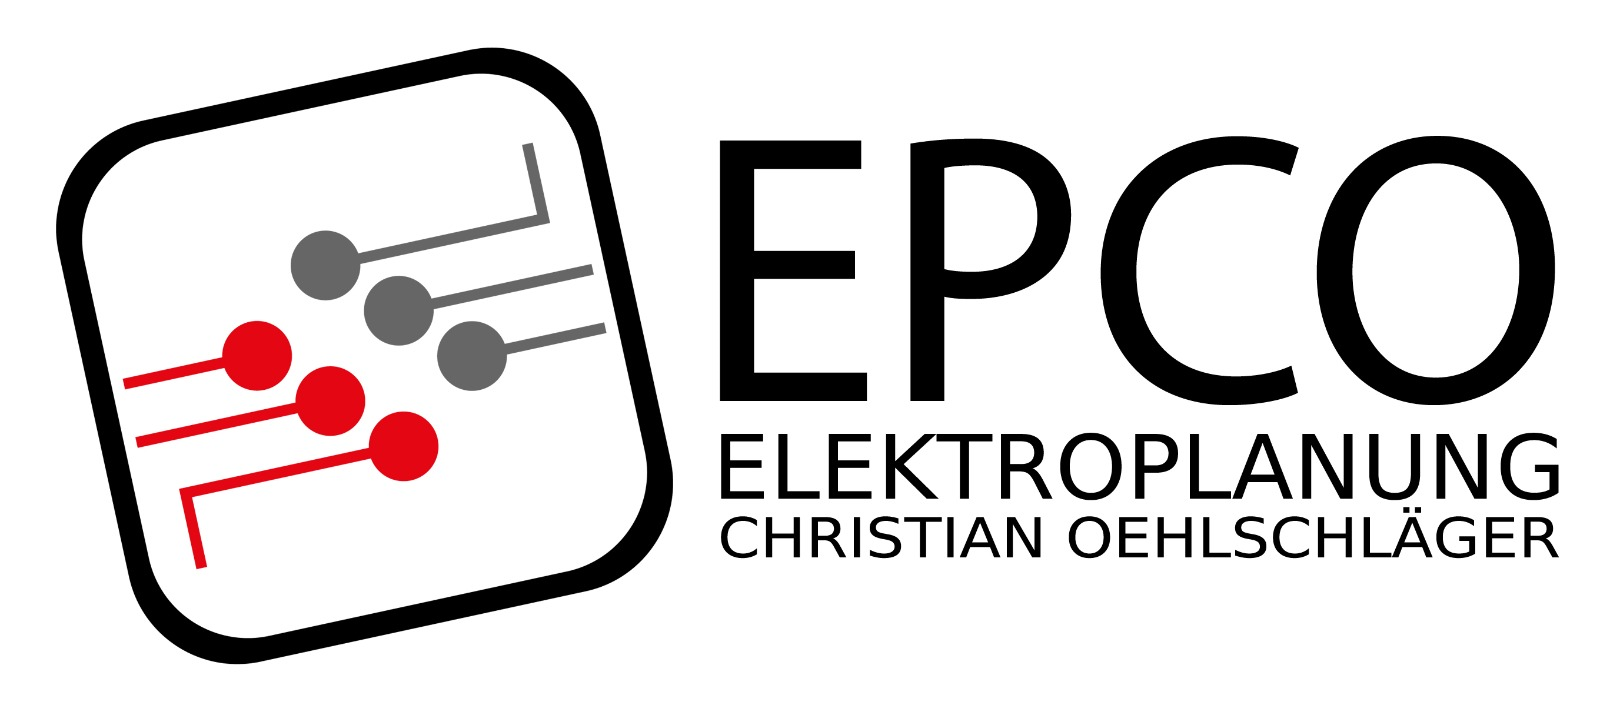 EPCO Elektroplanung Christian Oehlschläger